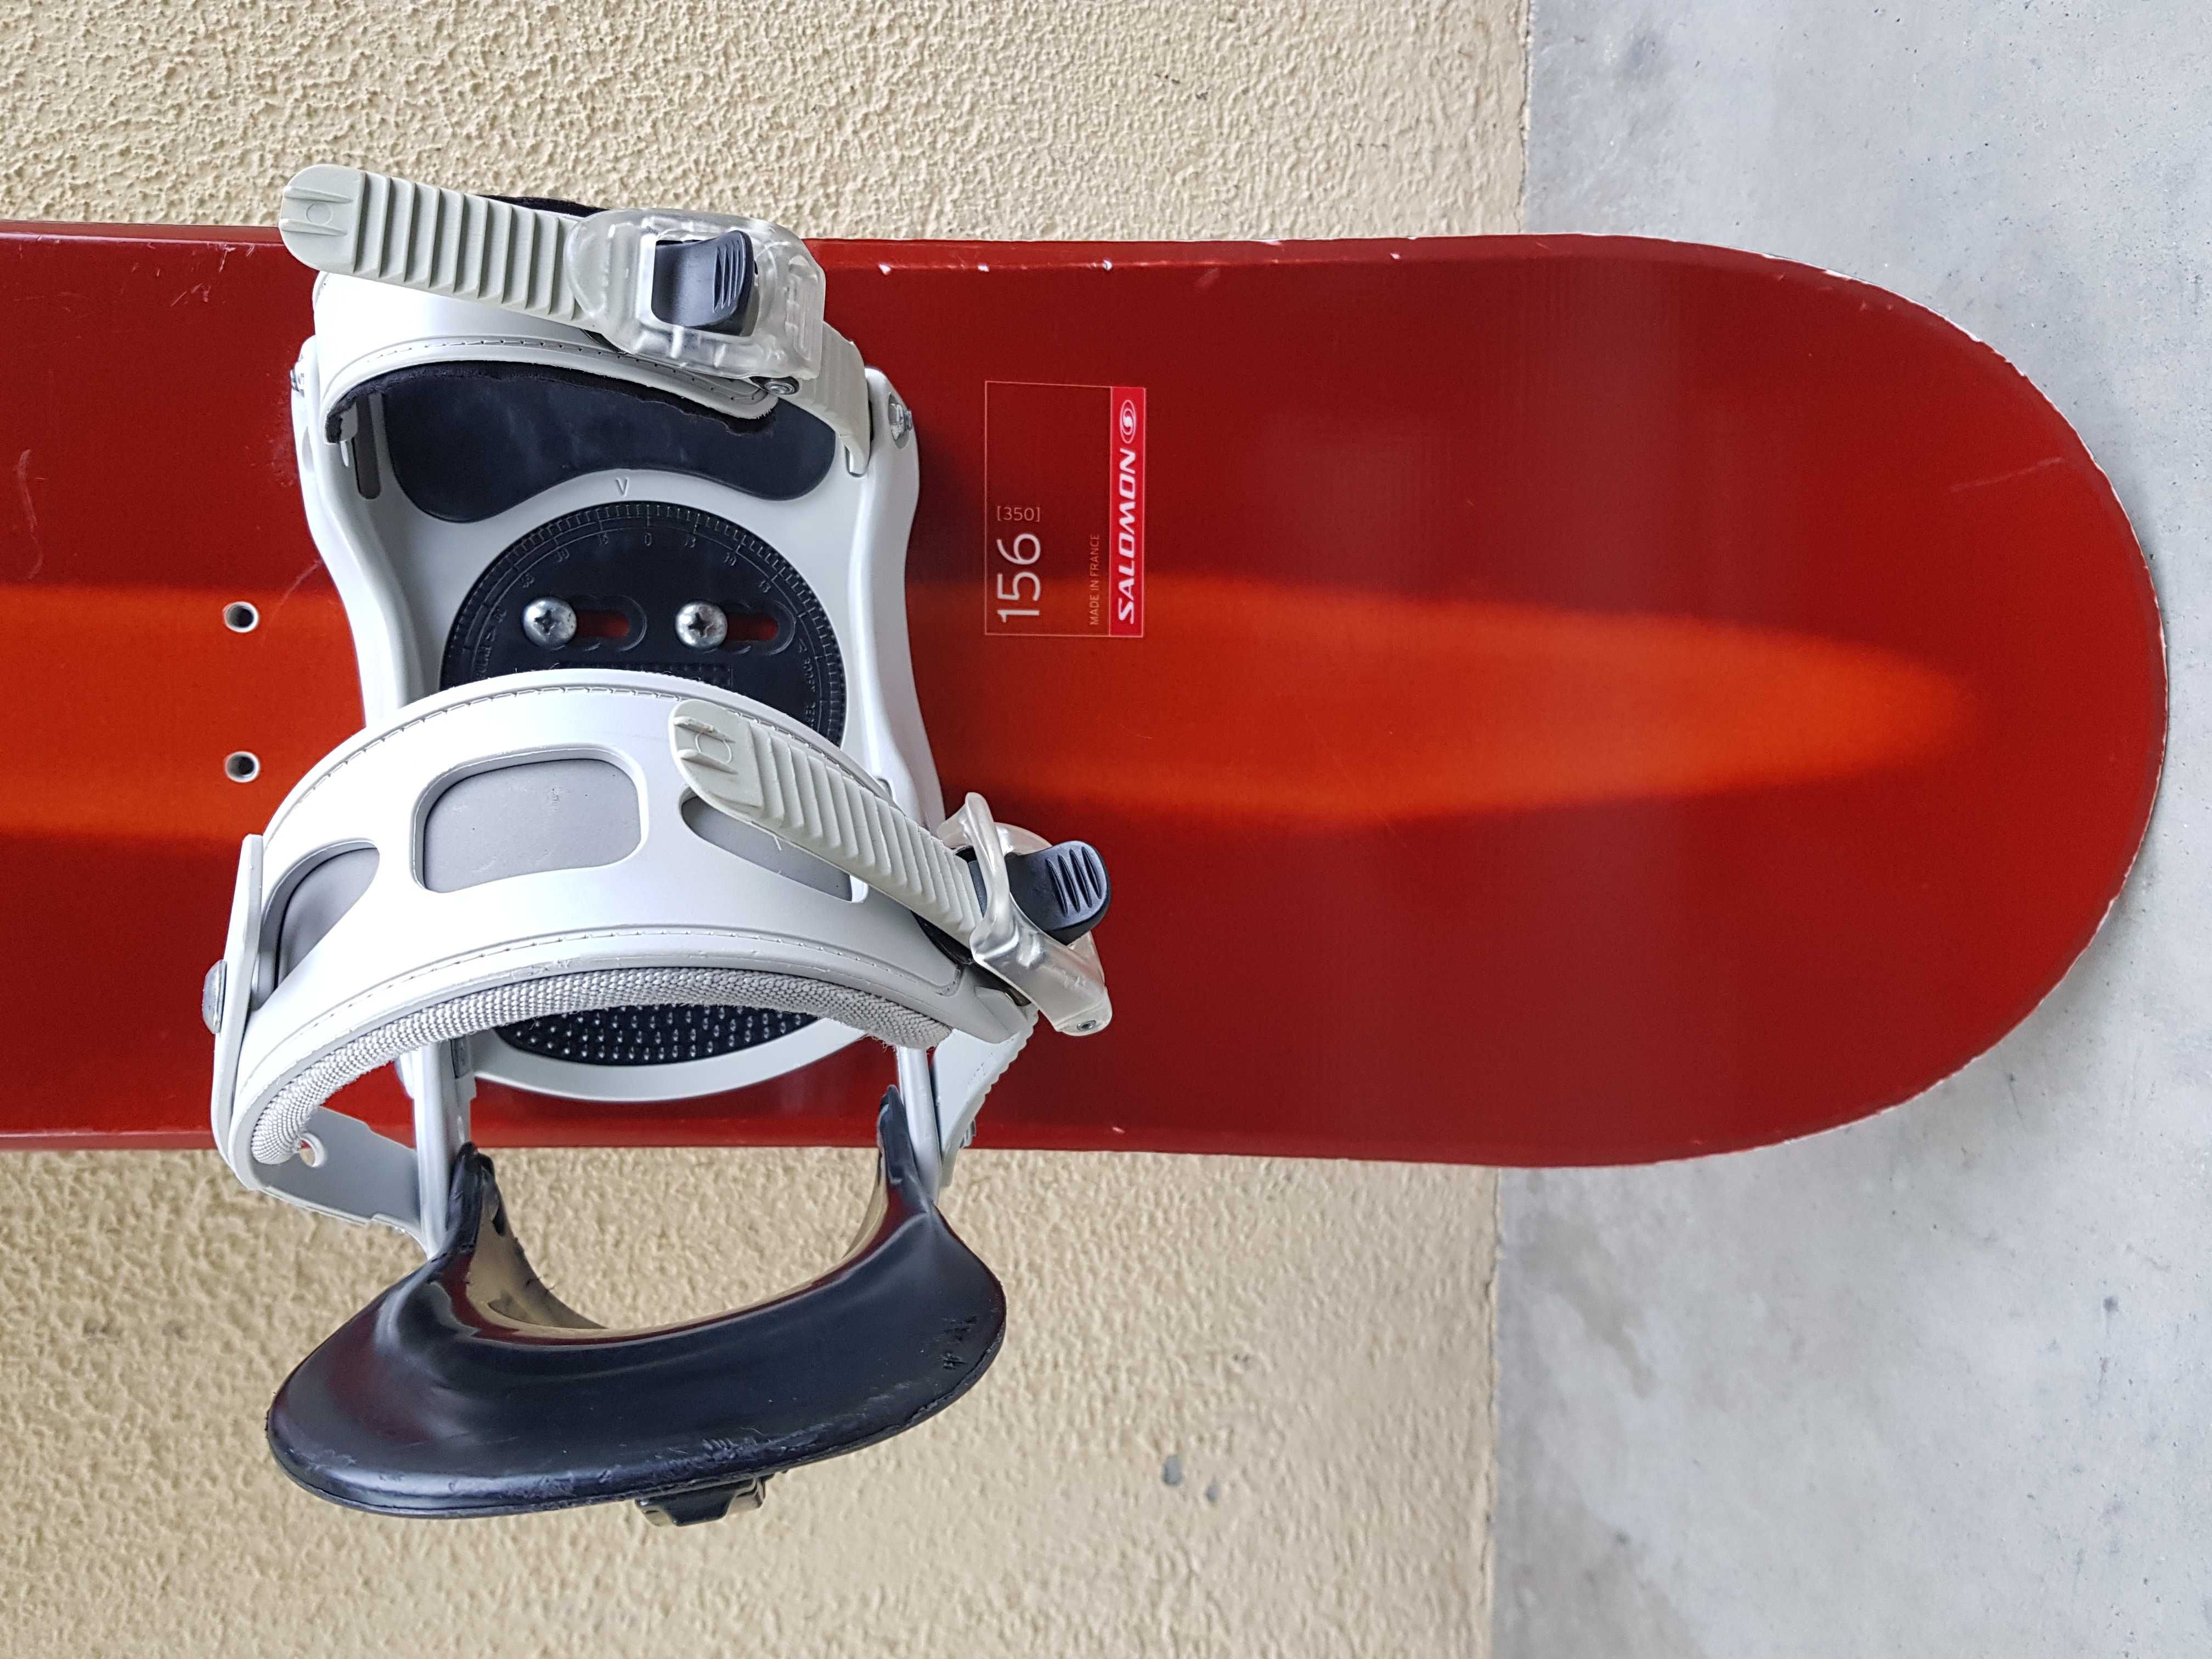 Placa snowboard Salomon, 156cm